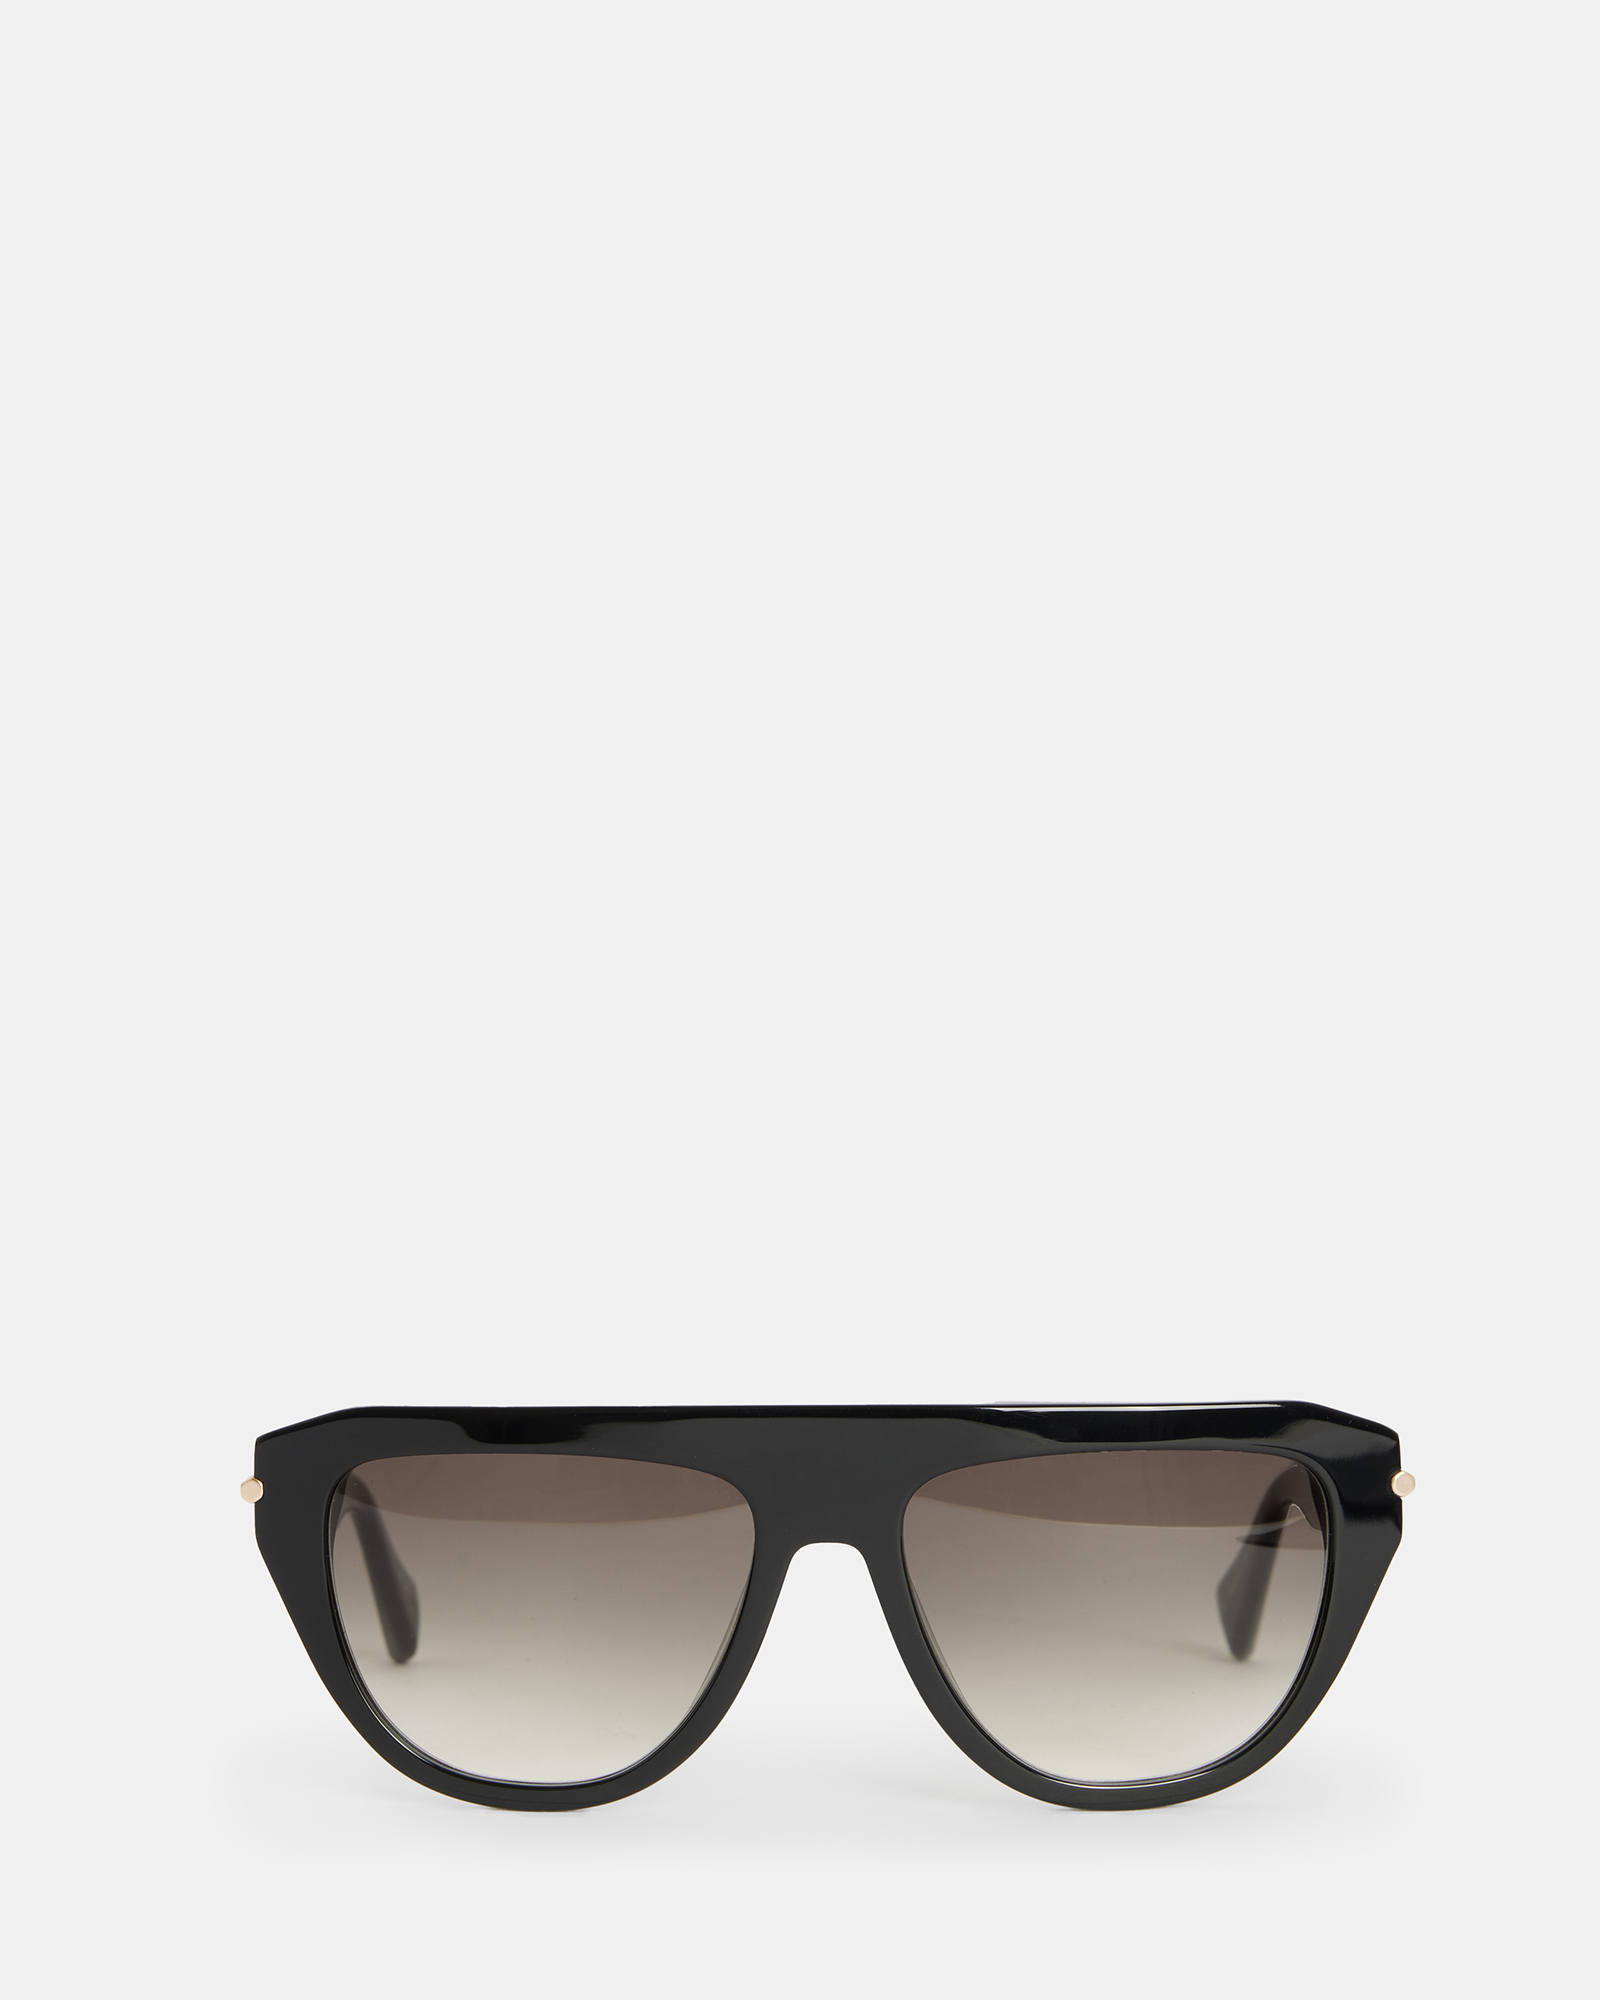 AllSaints Joy Sunglasses,, Black, Size: One Size